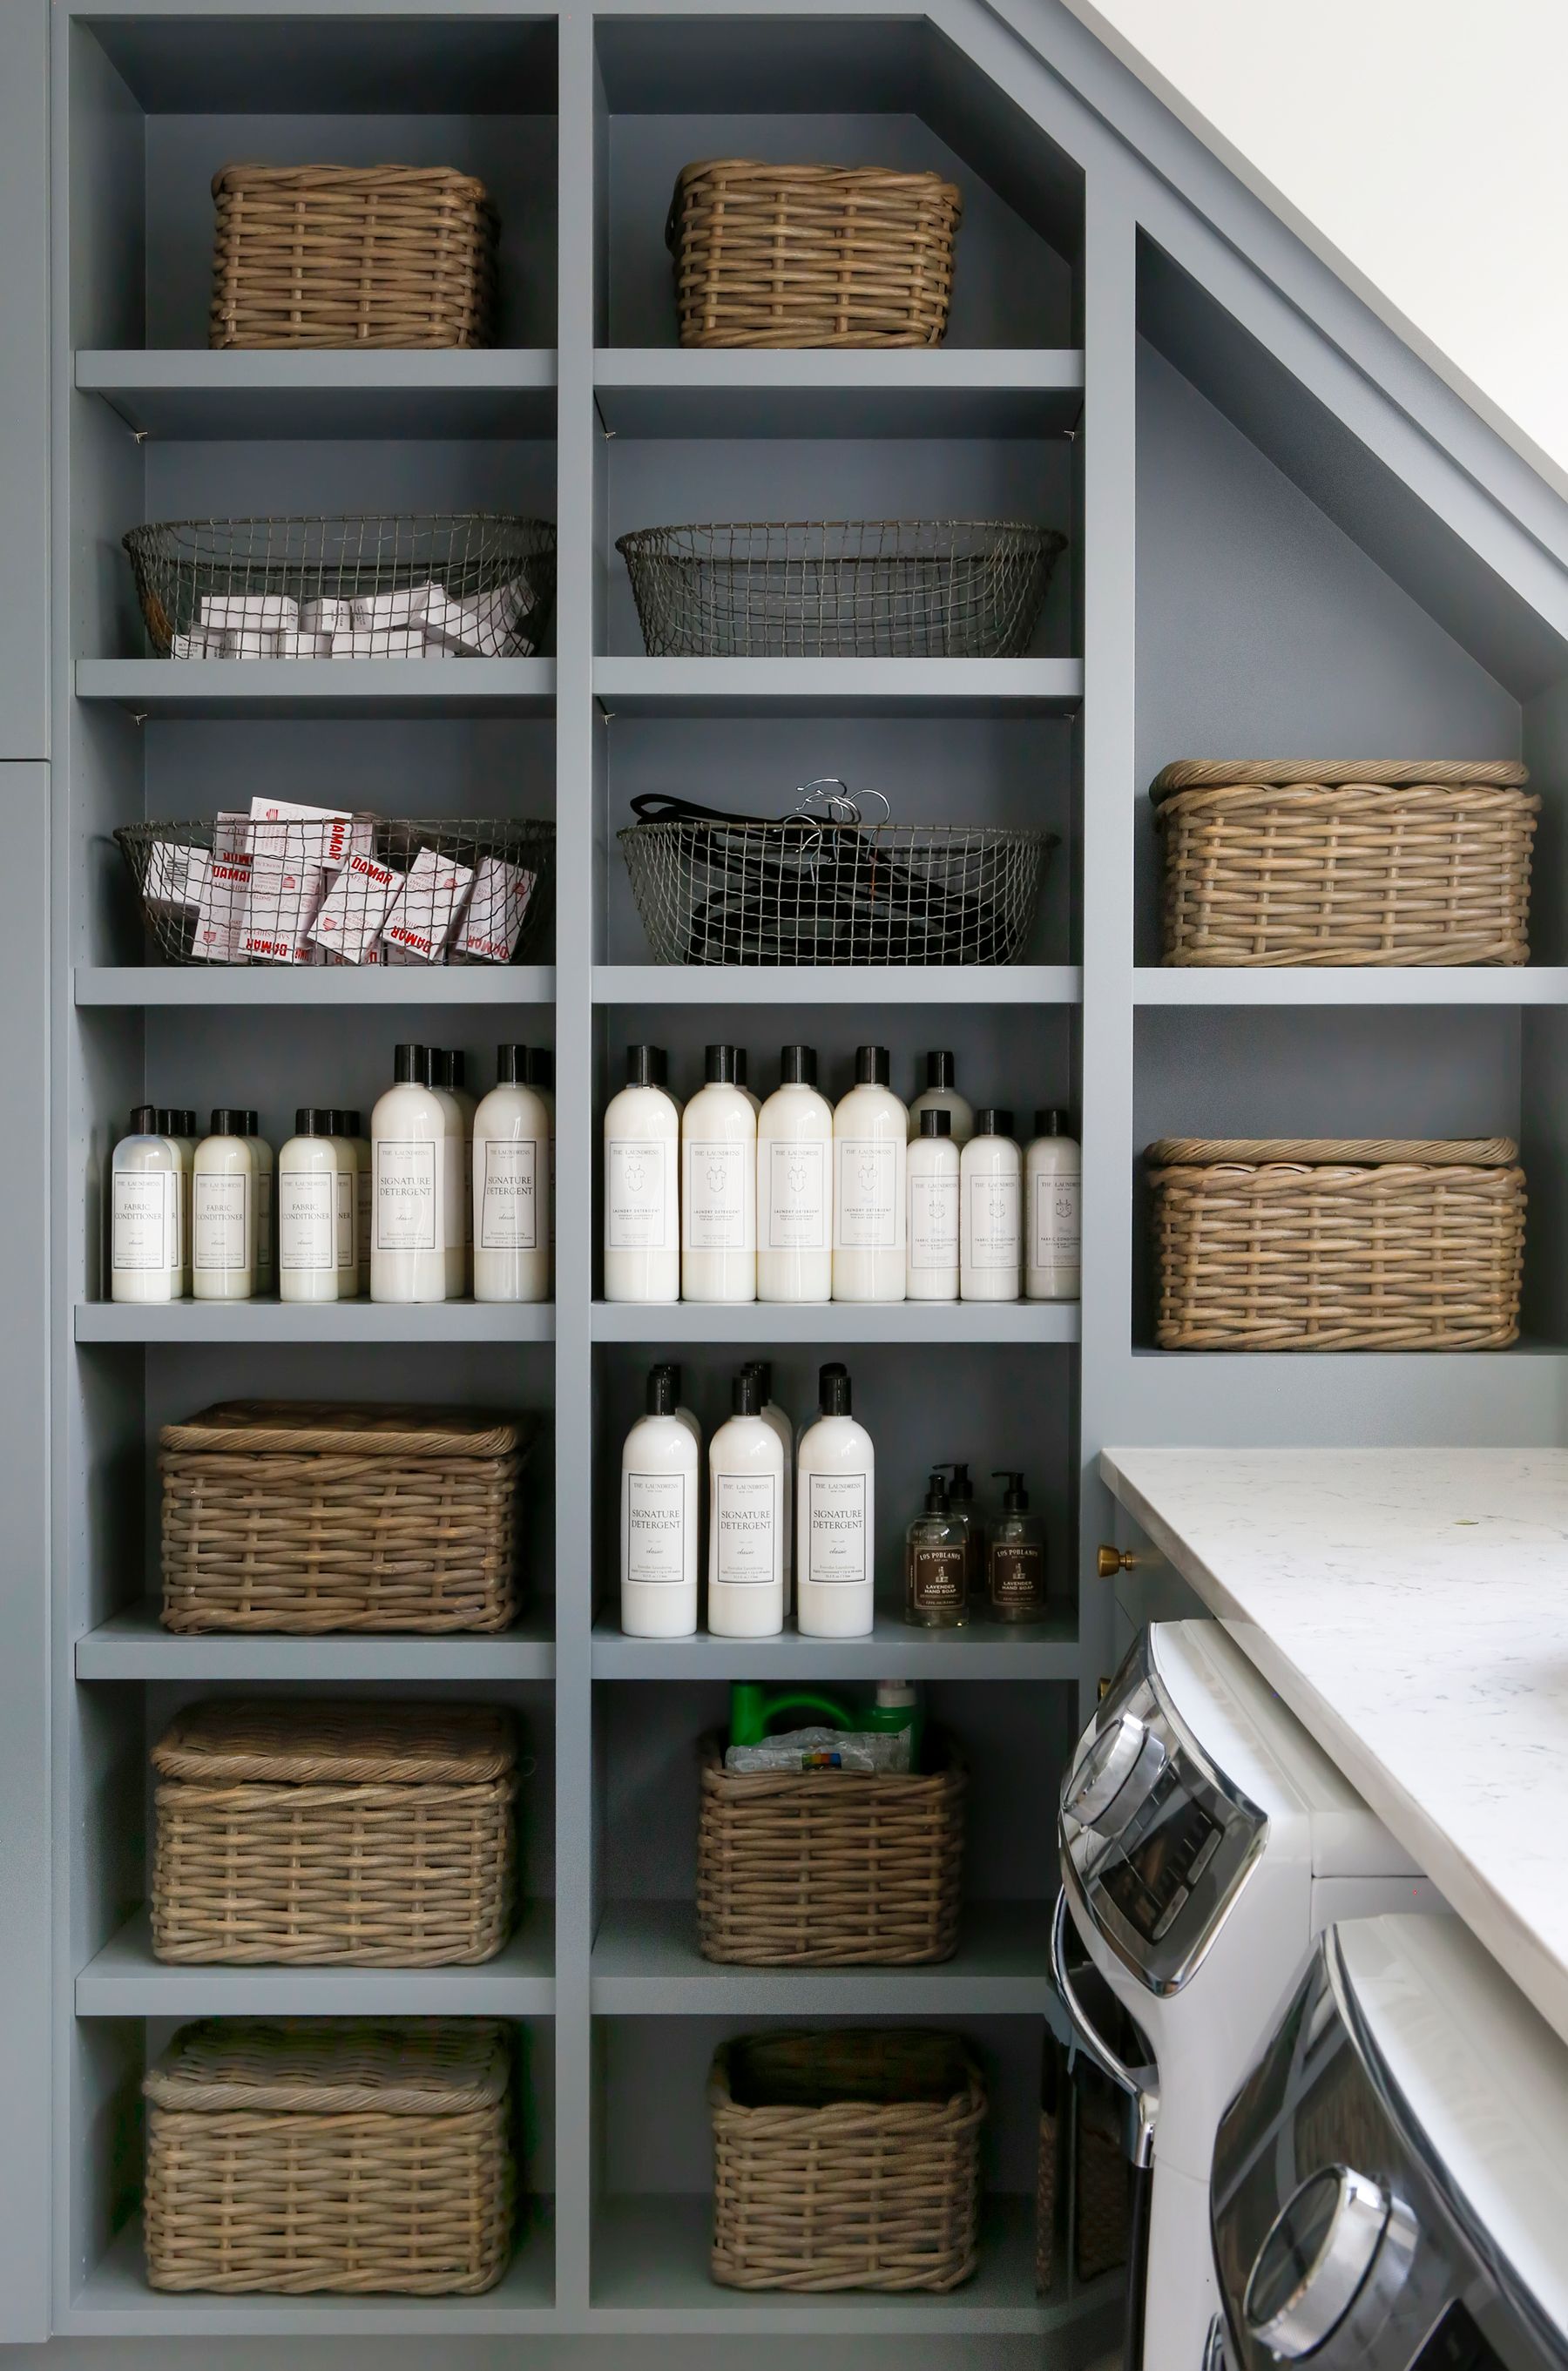 55 Small Laundry Room Ideas Storage Tips - Diy Laundry Room Cabinet Ideas